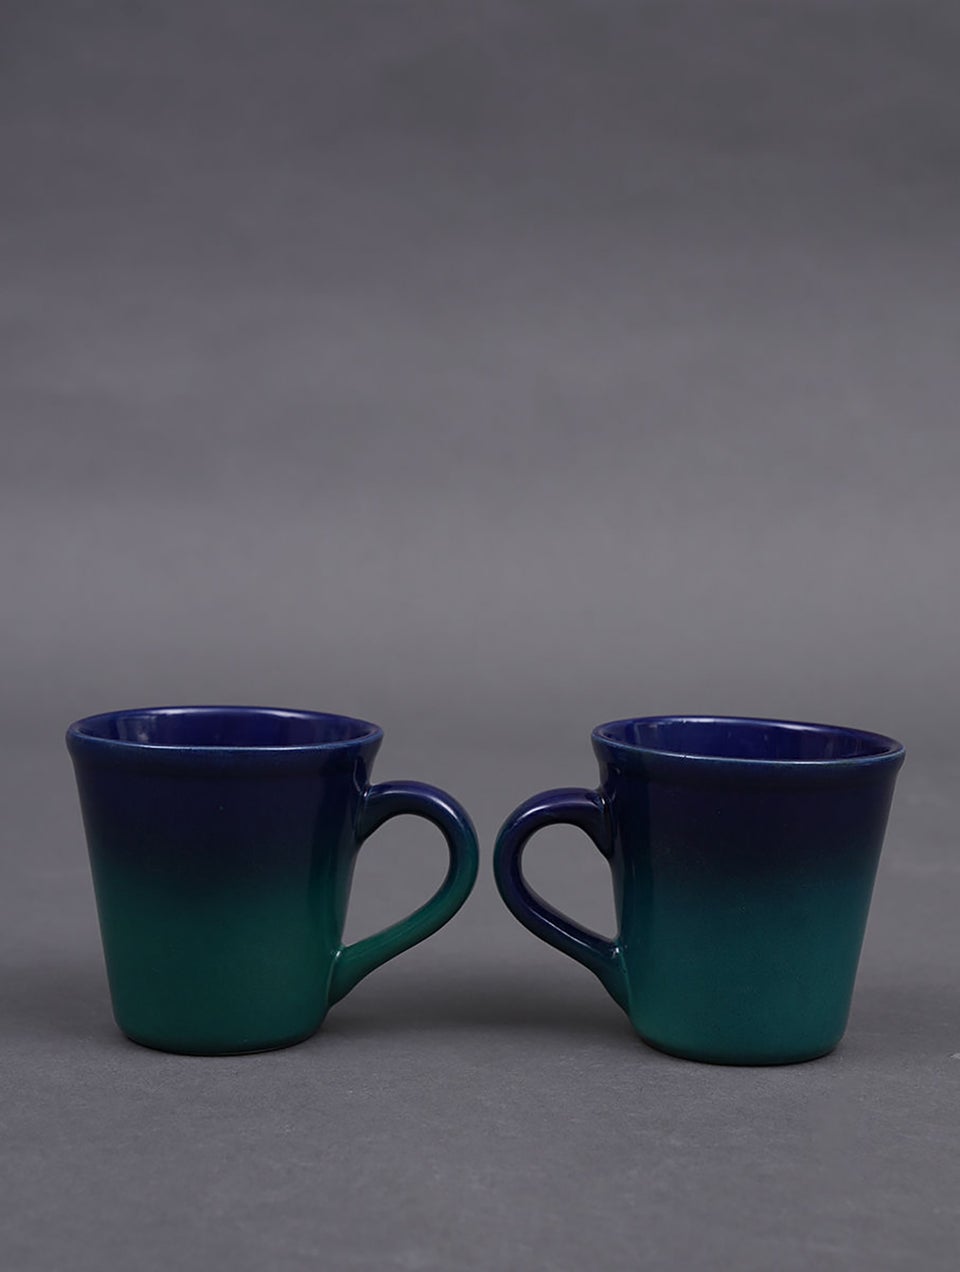 Handpainted Ceramic Mugs